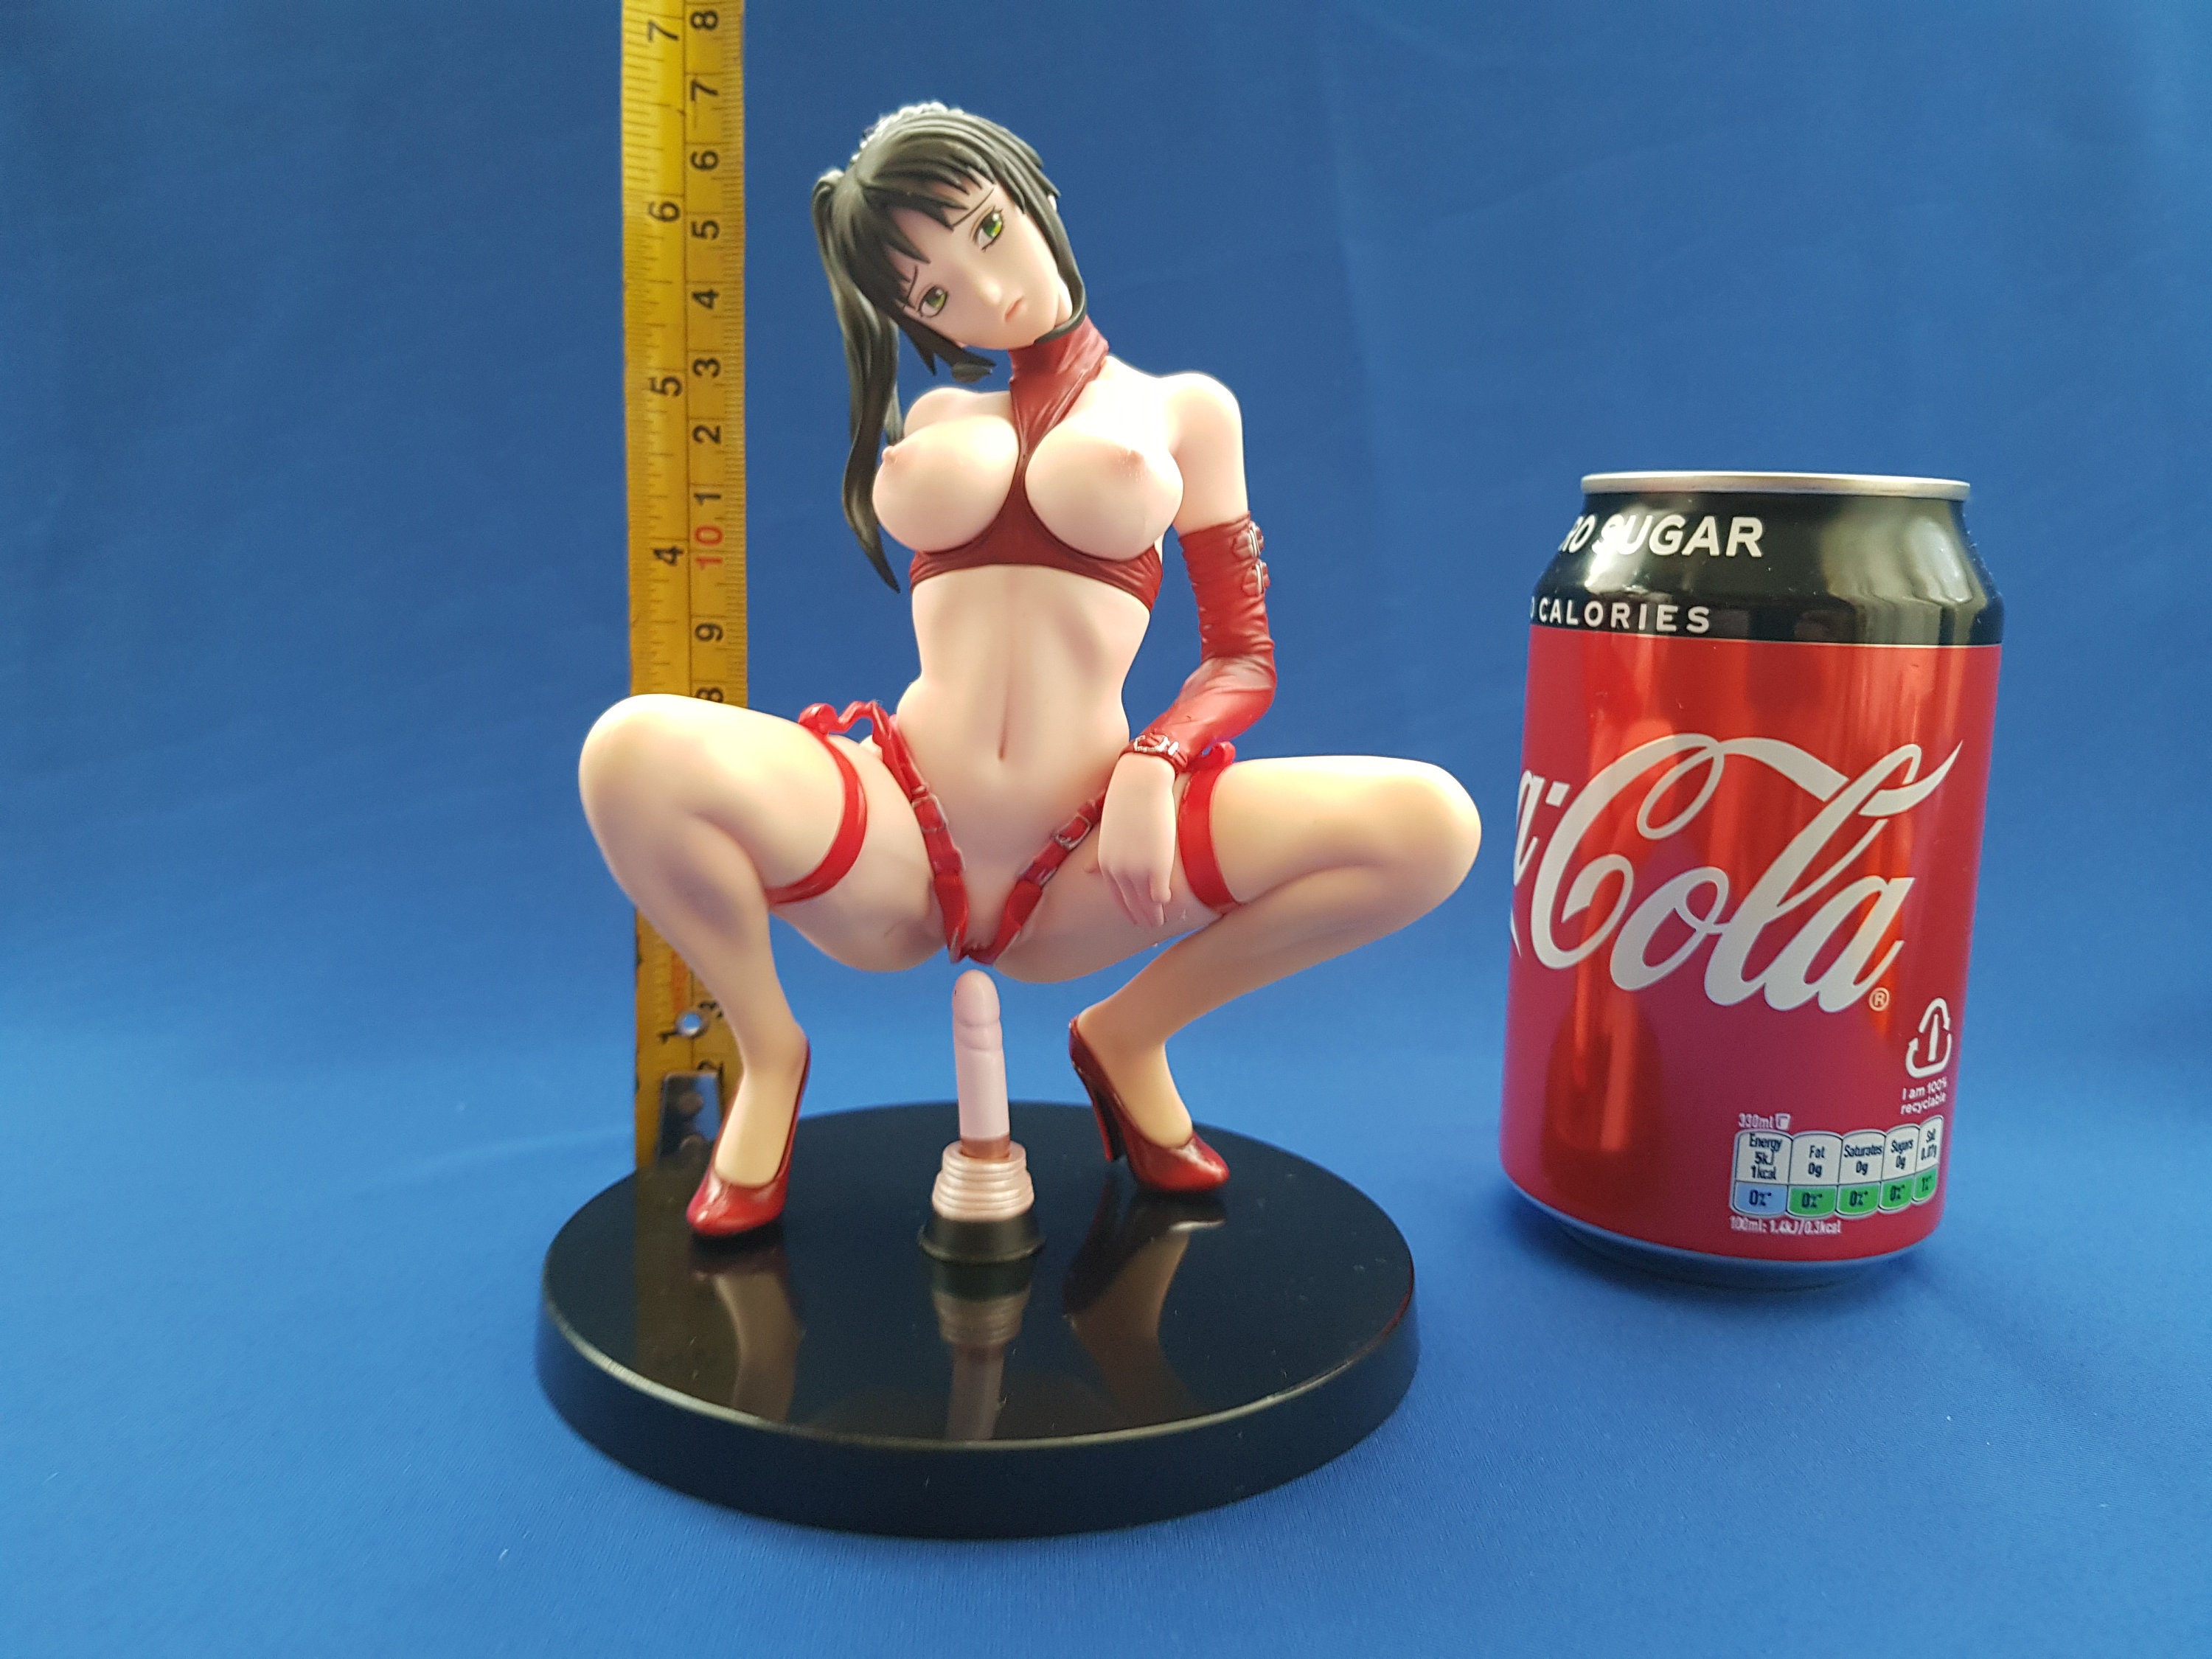 Anime nude doll